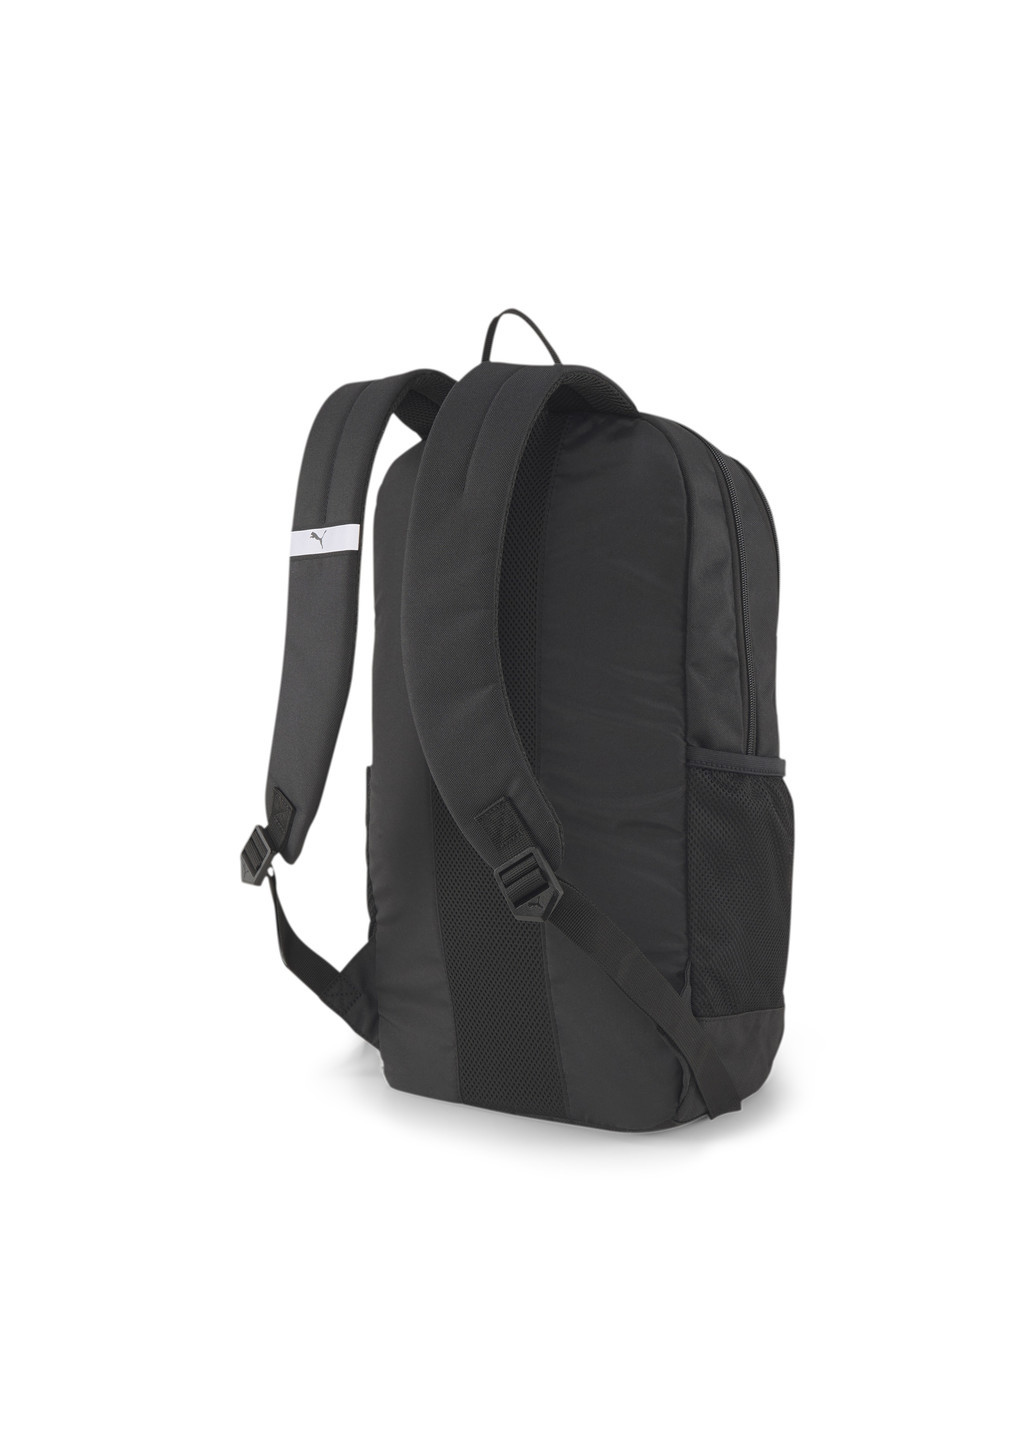 Рюкзак Puma Deck Backpack чёрный